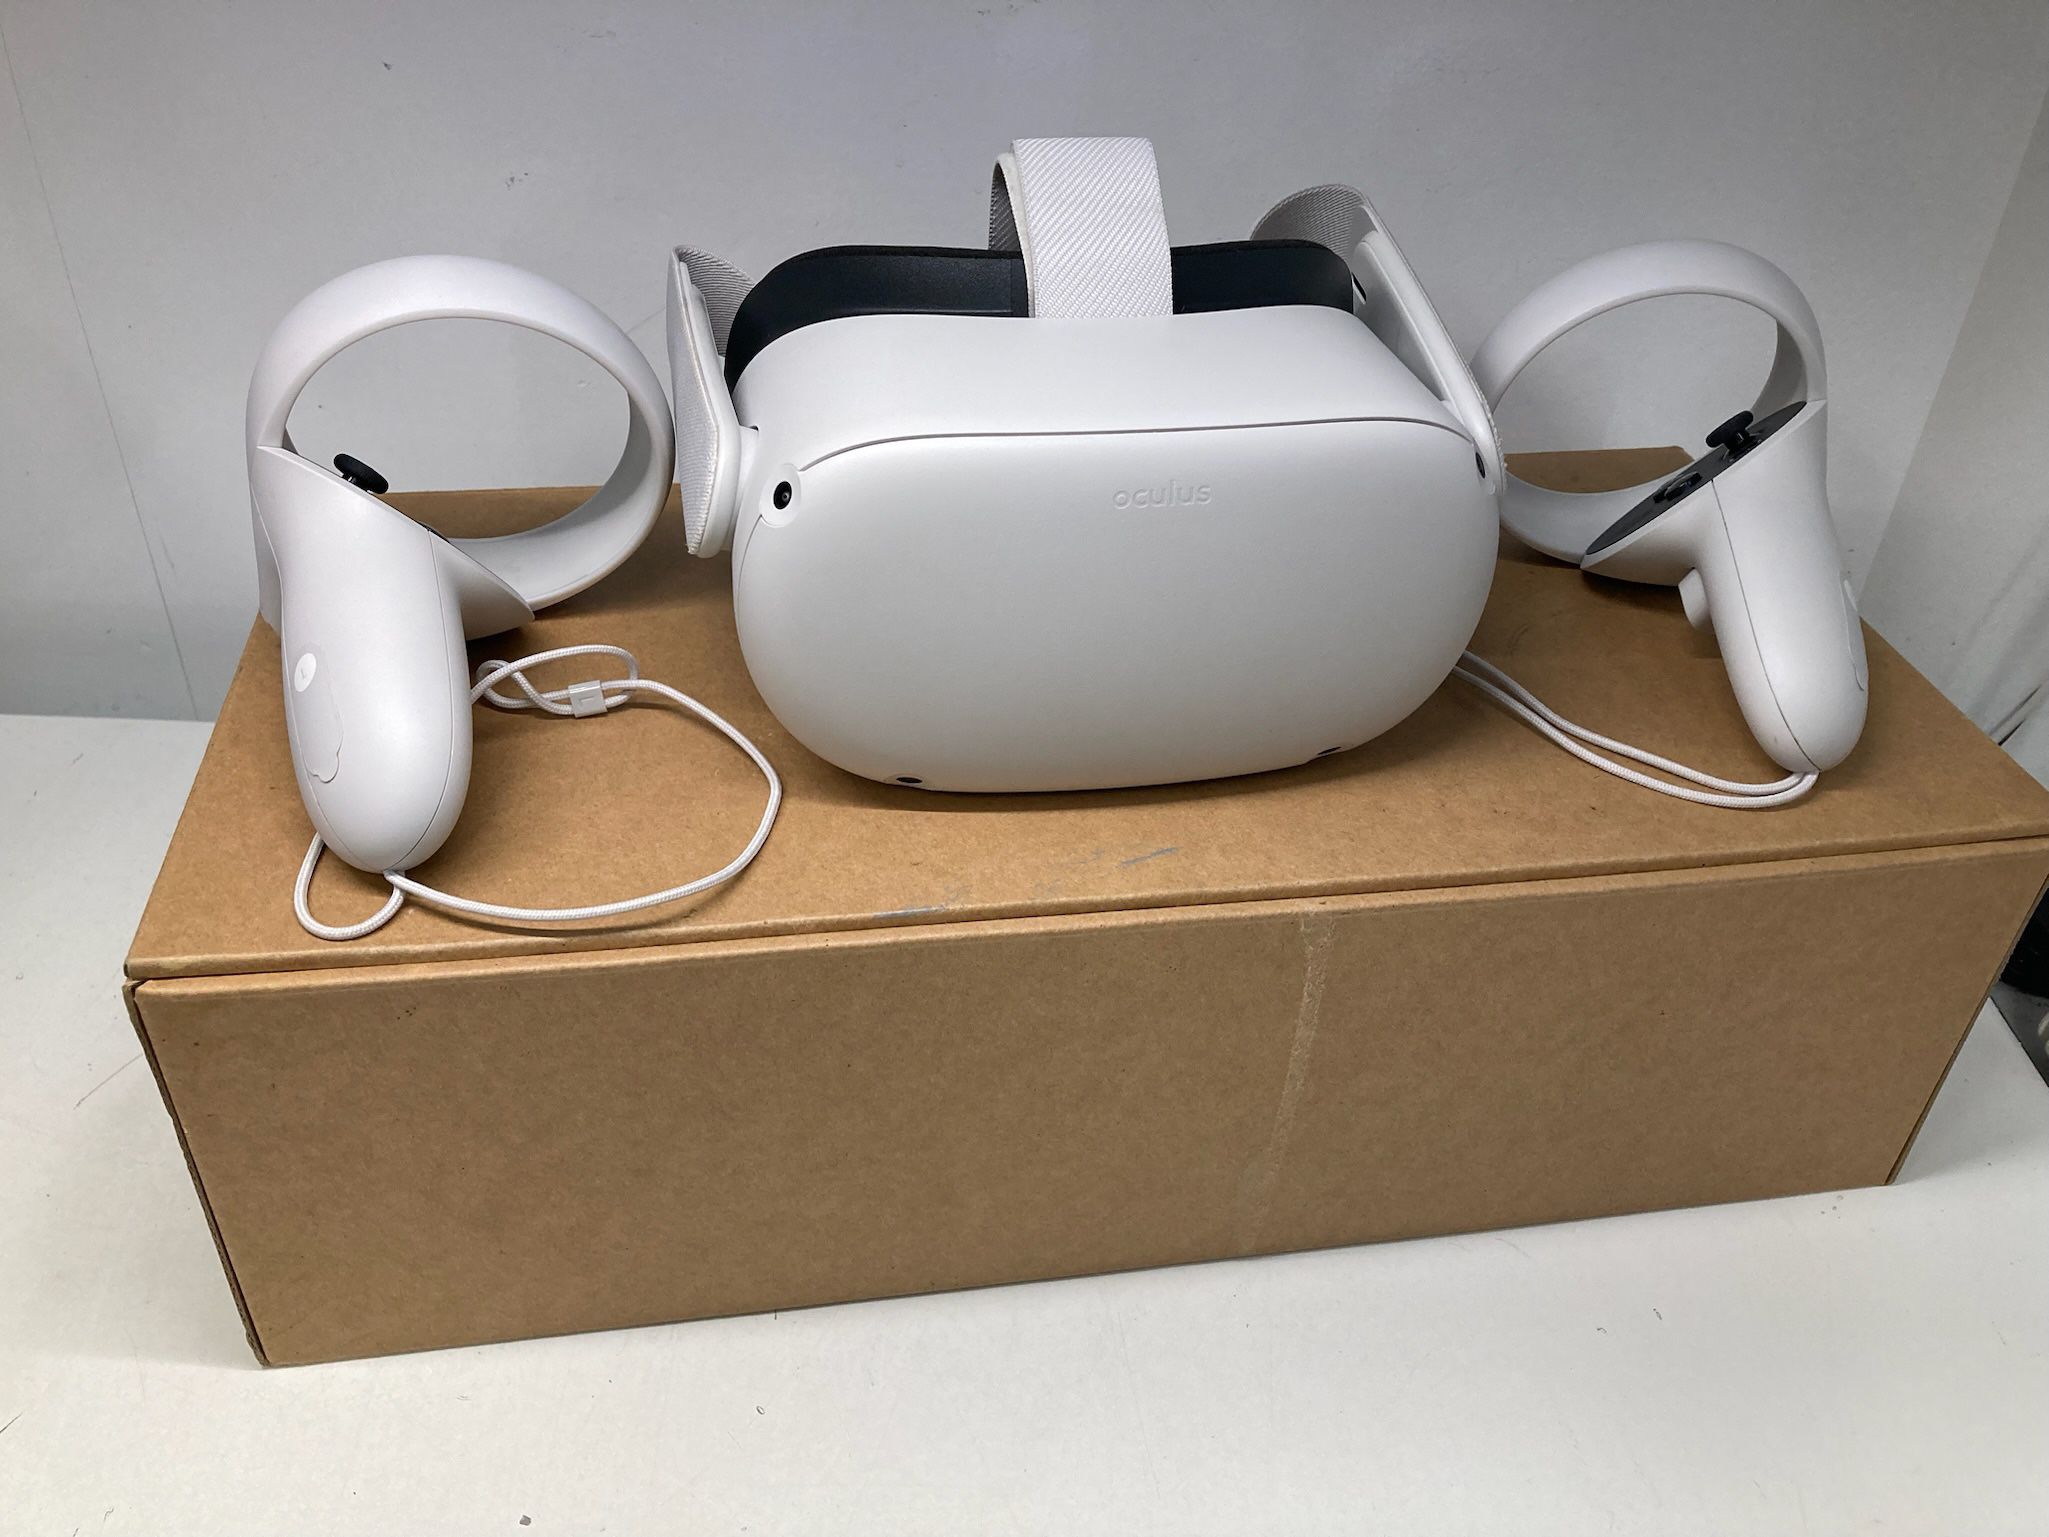 Meta Oculus Quest 2 64GB Standalone VR Headset for Sale in Lynn